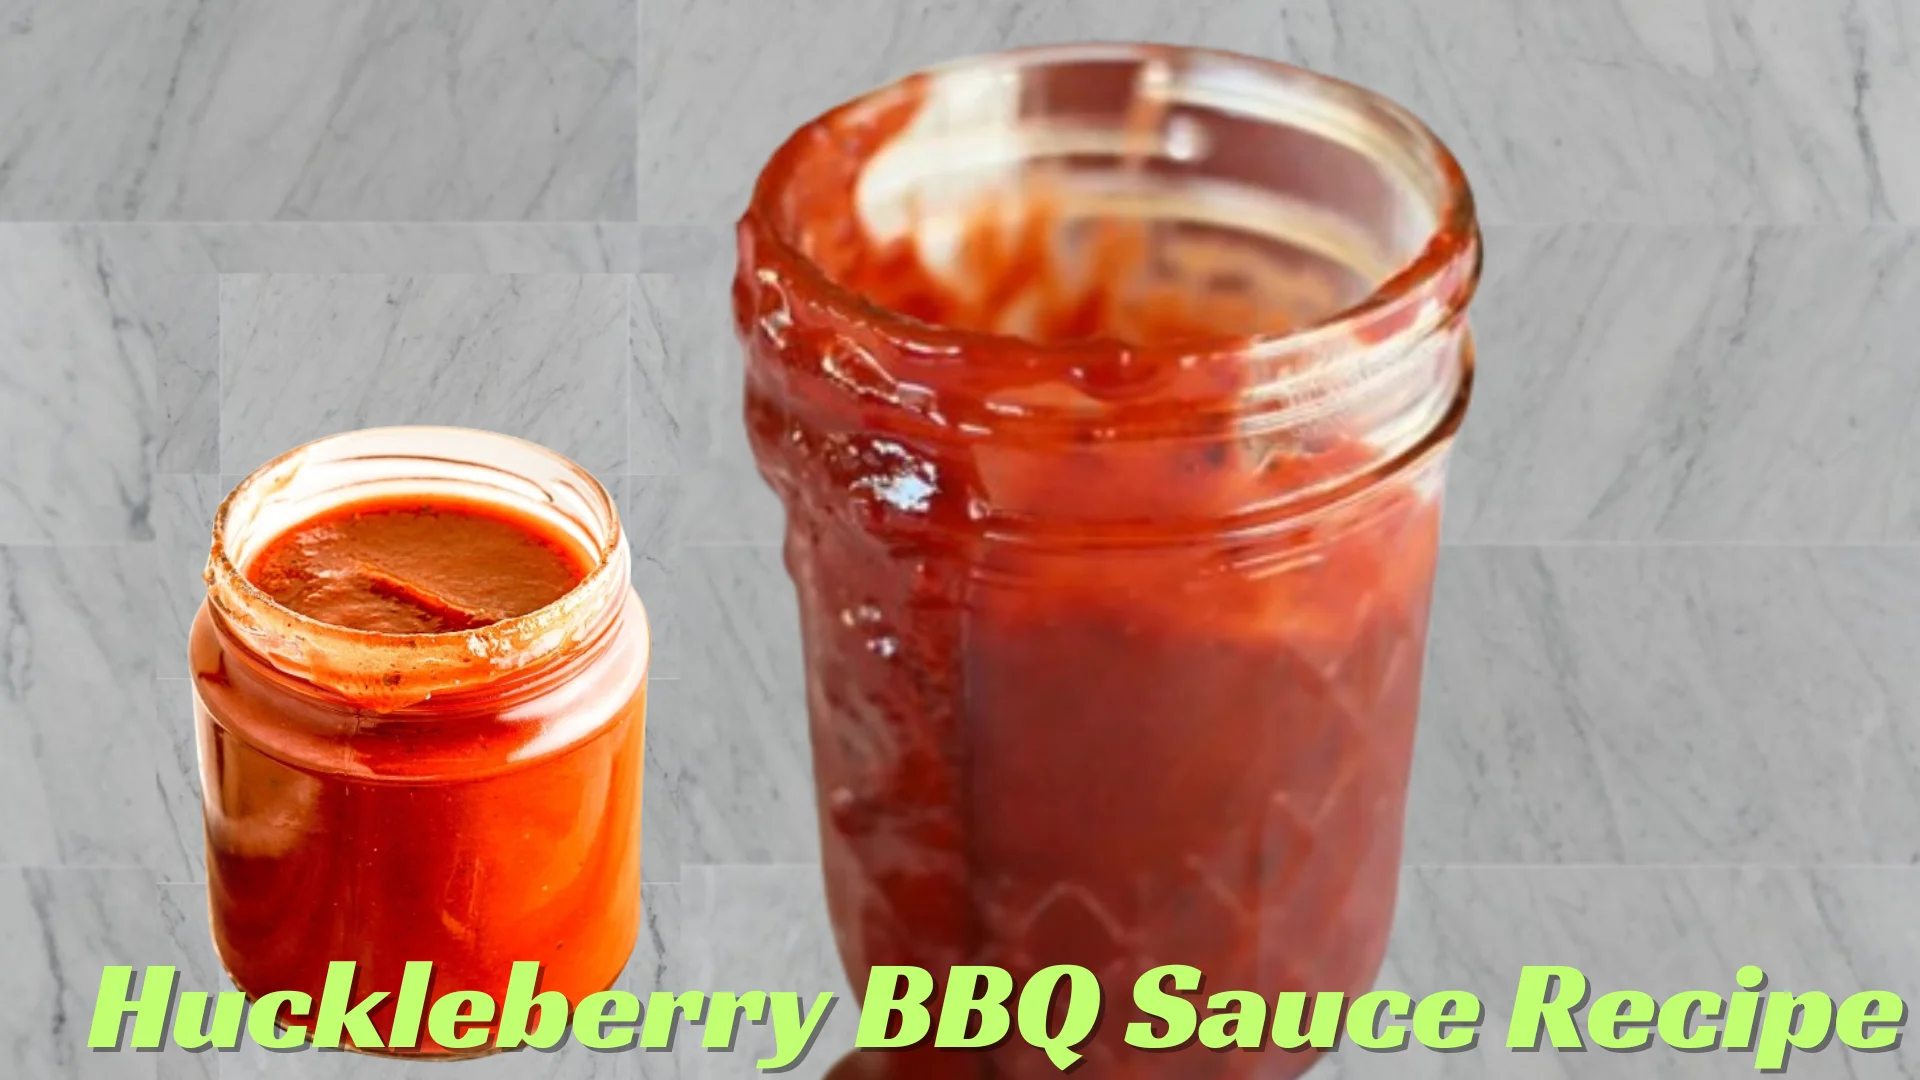 Huckleberry BBQ Sauce Recipe